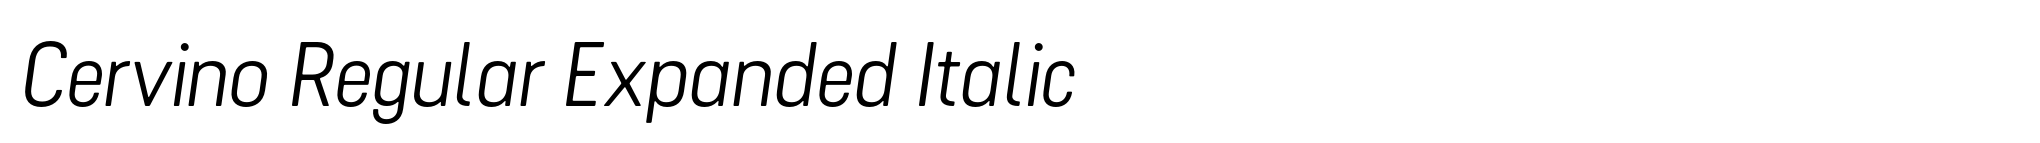 Cervino Regular Expanded Italic image